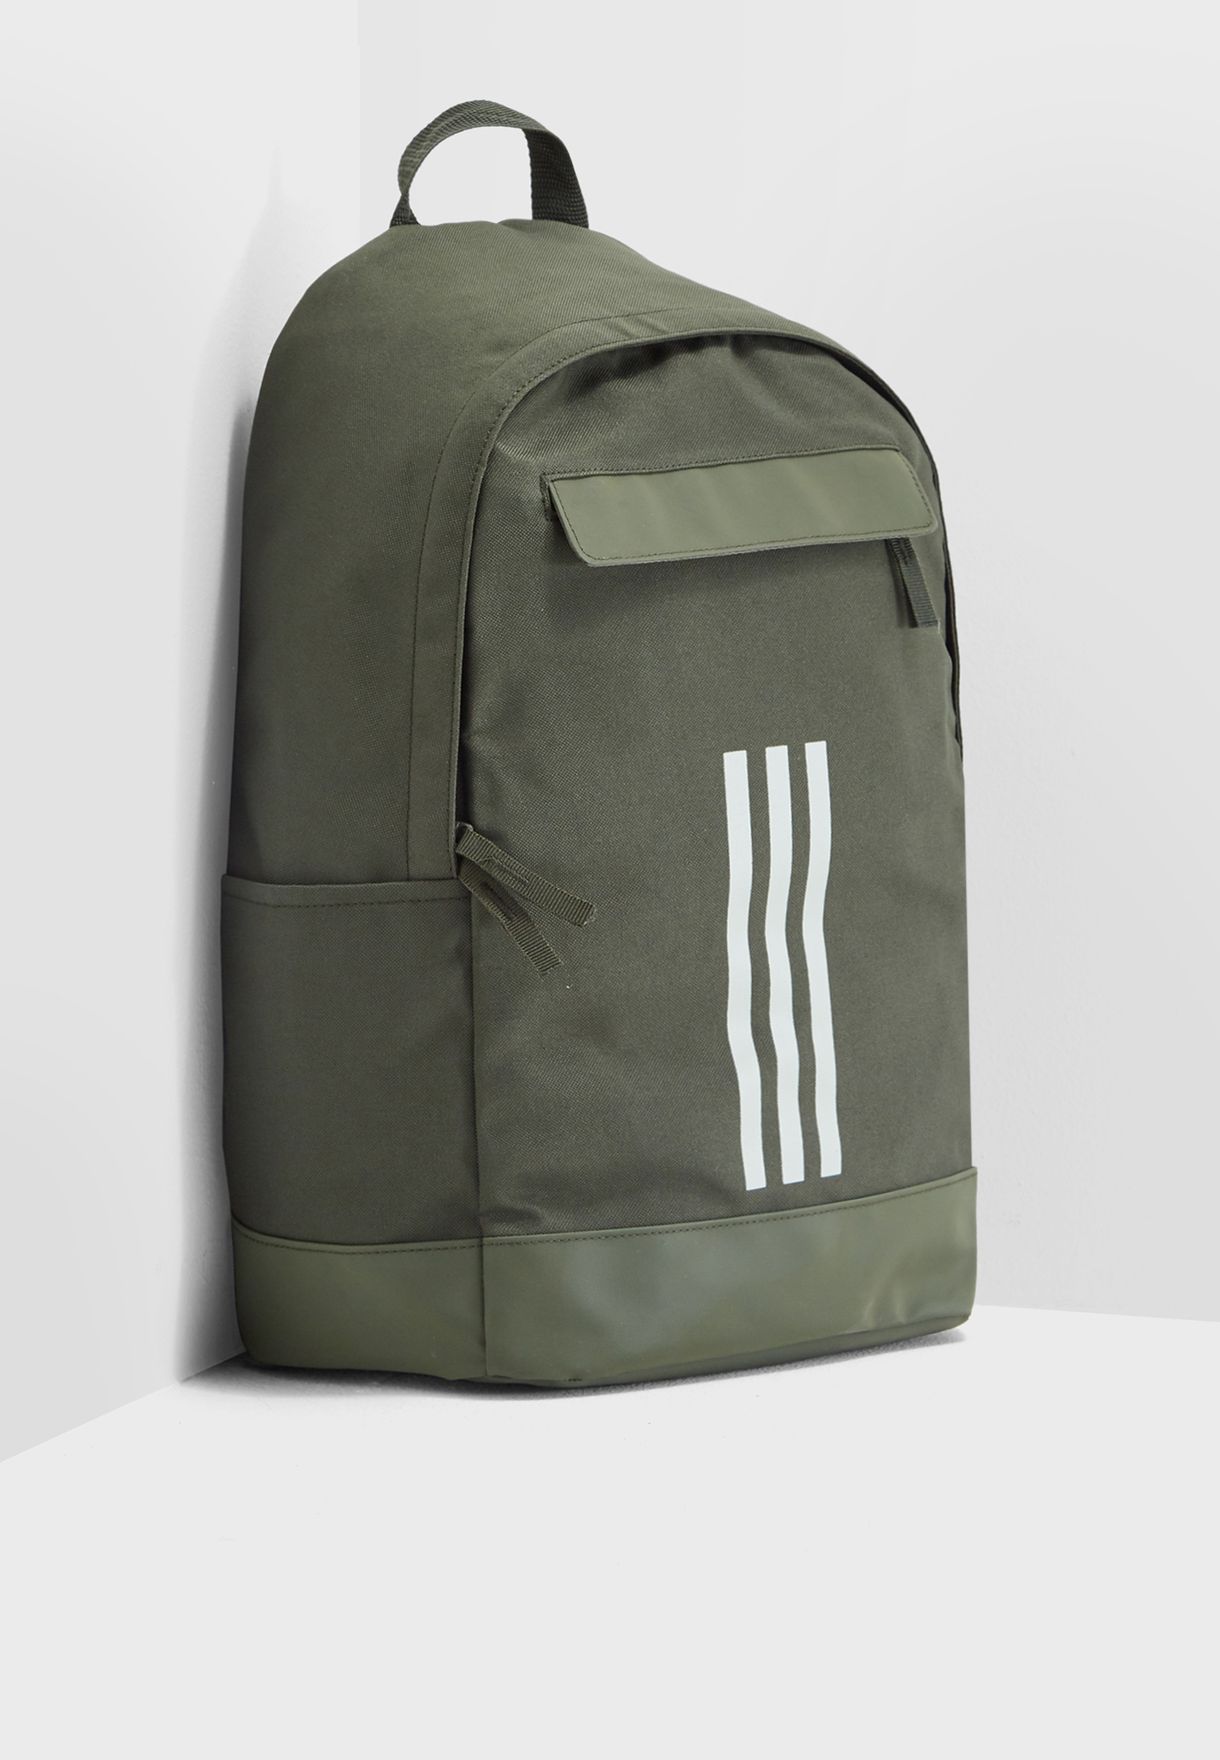 green adidas backpack